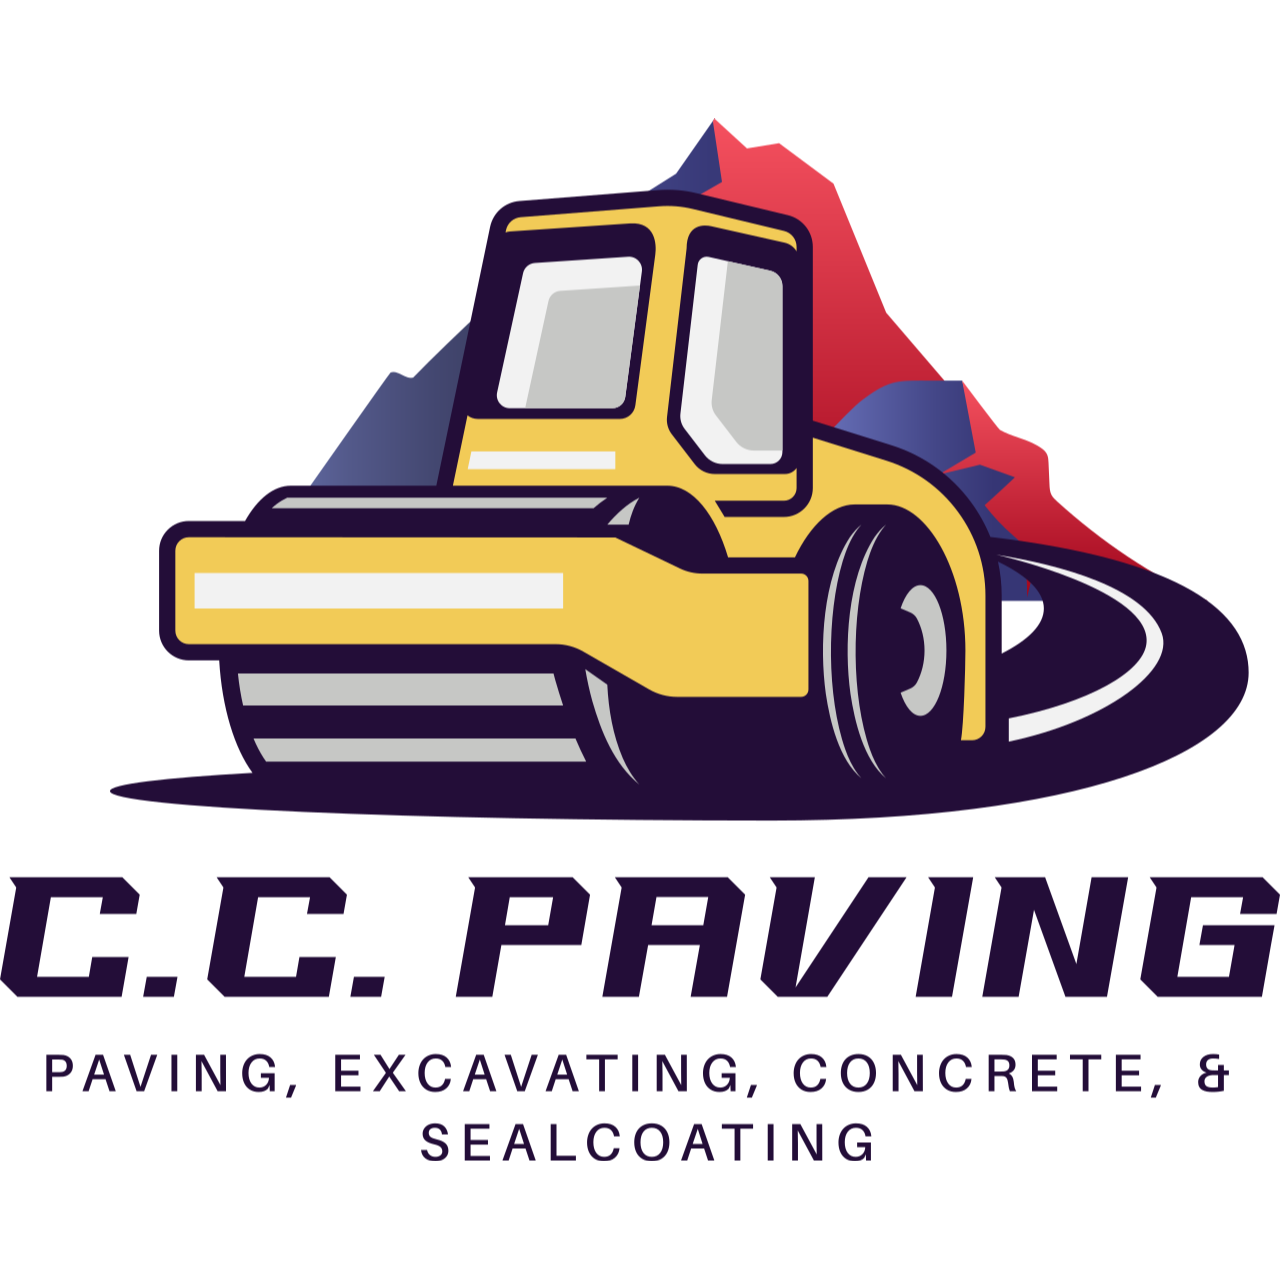 C.C. Paving - Paving, Excavating, Concrete & Sealcoating - Scranton, PA - (570)313-7320 | ShowMeLocal.com